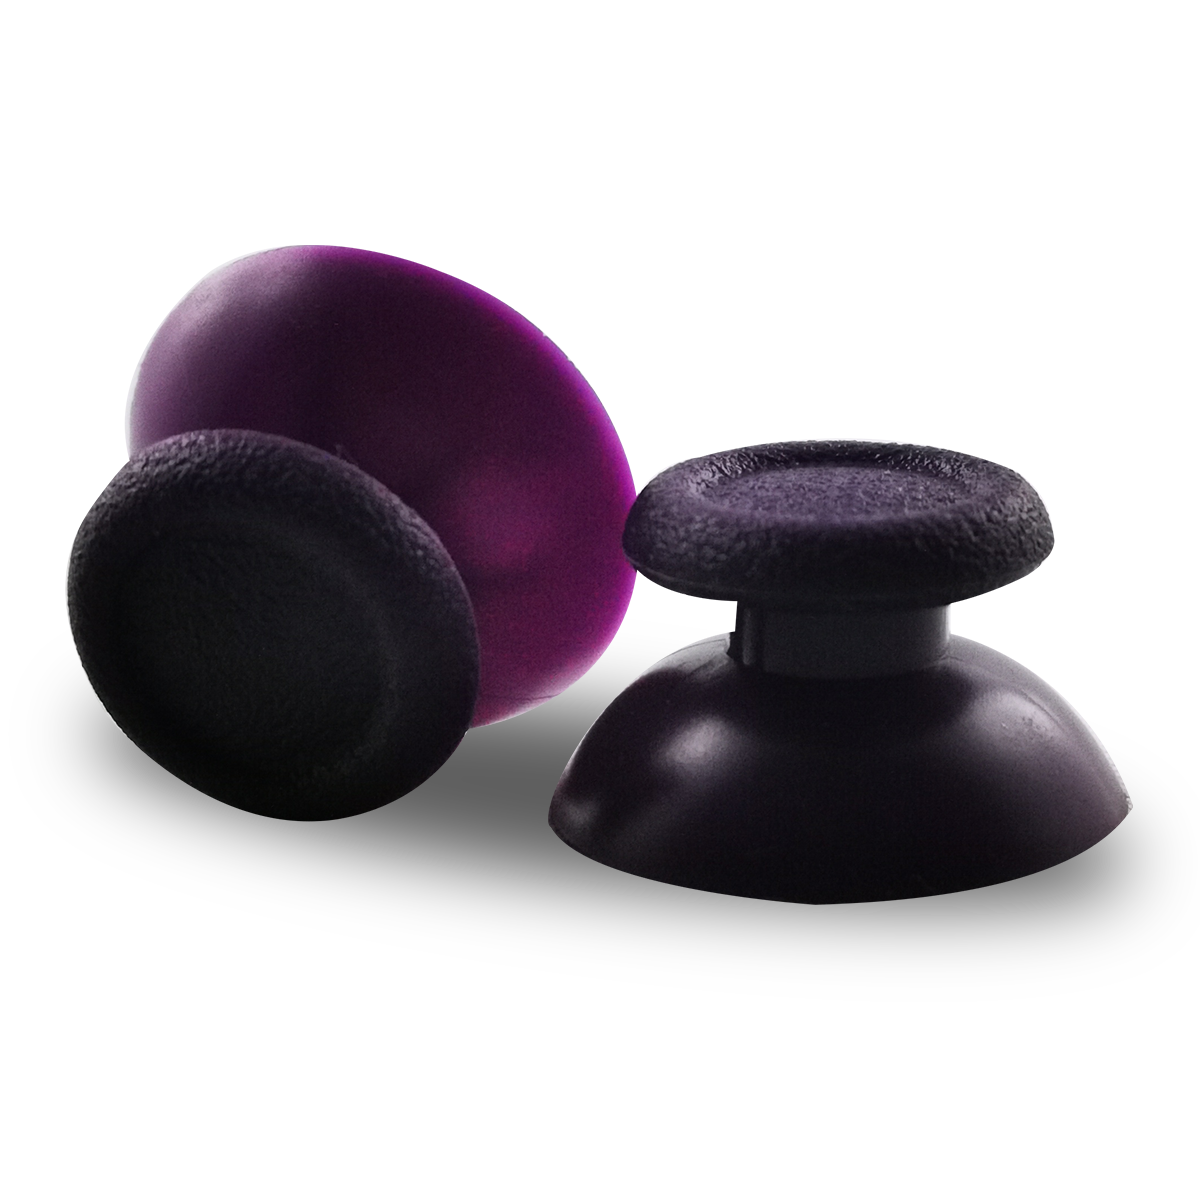 joysticks-PS4-custom-manette-personnalisee-drawmypad-couleur-violet